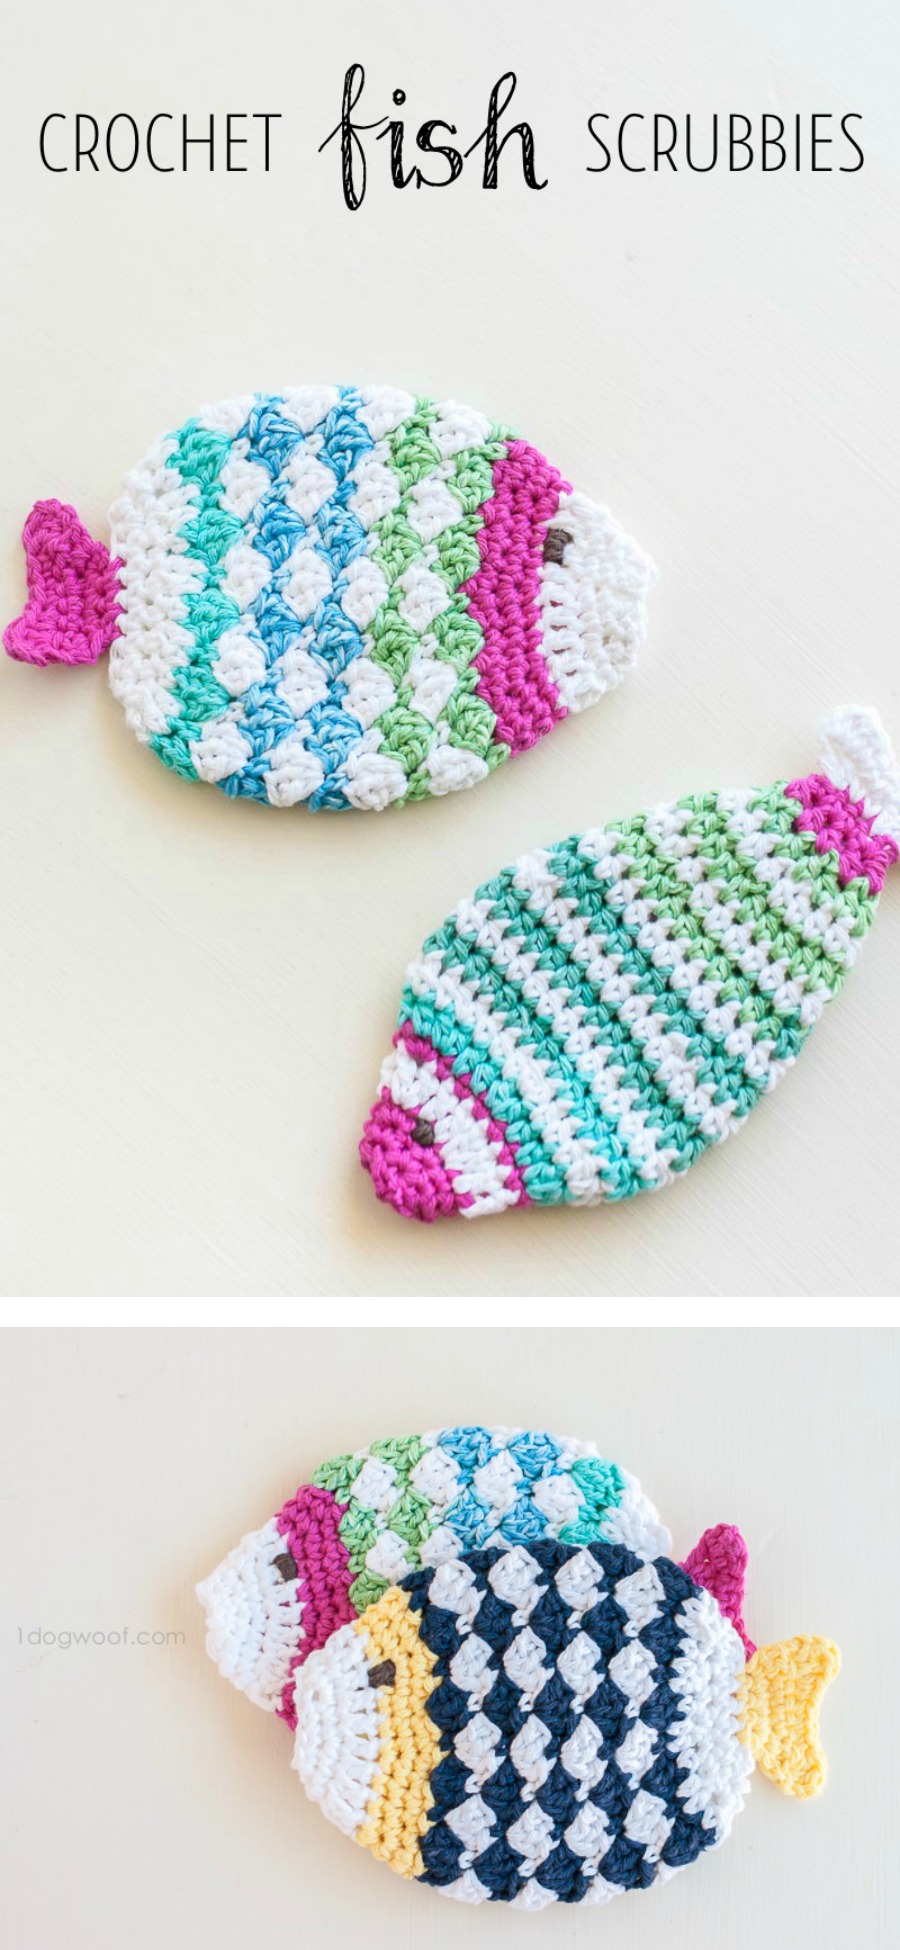 Crochet fish scrubbie washcloths. Wouldn't this make great housewarming gifts? | www.1dogwoof.com